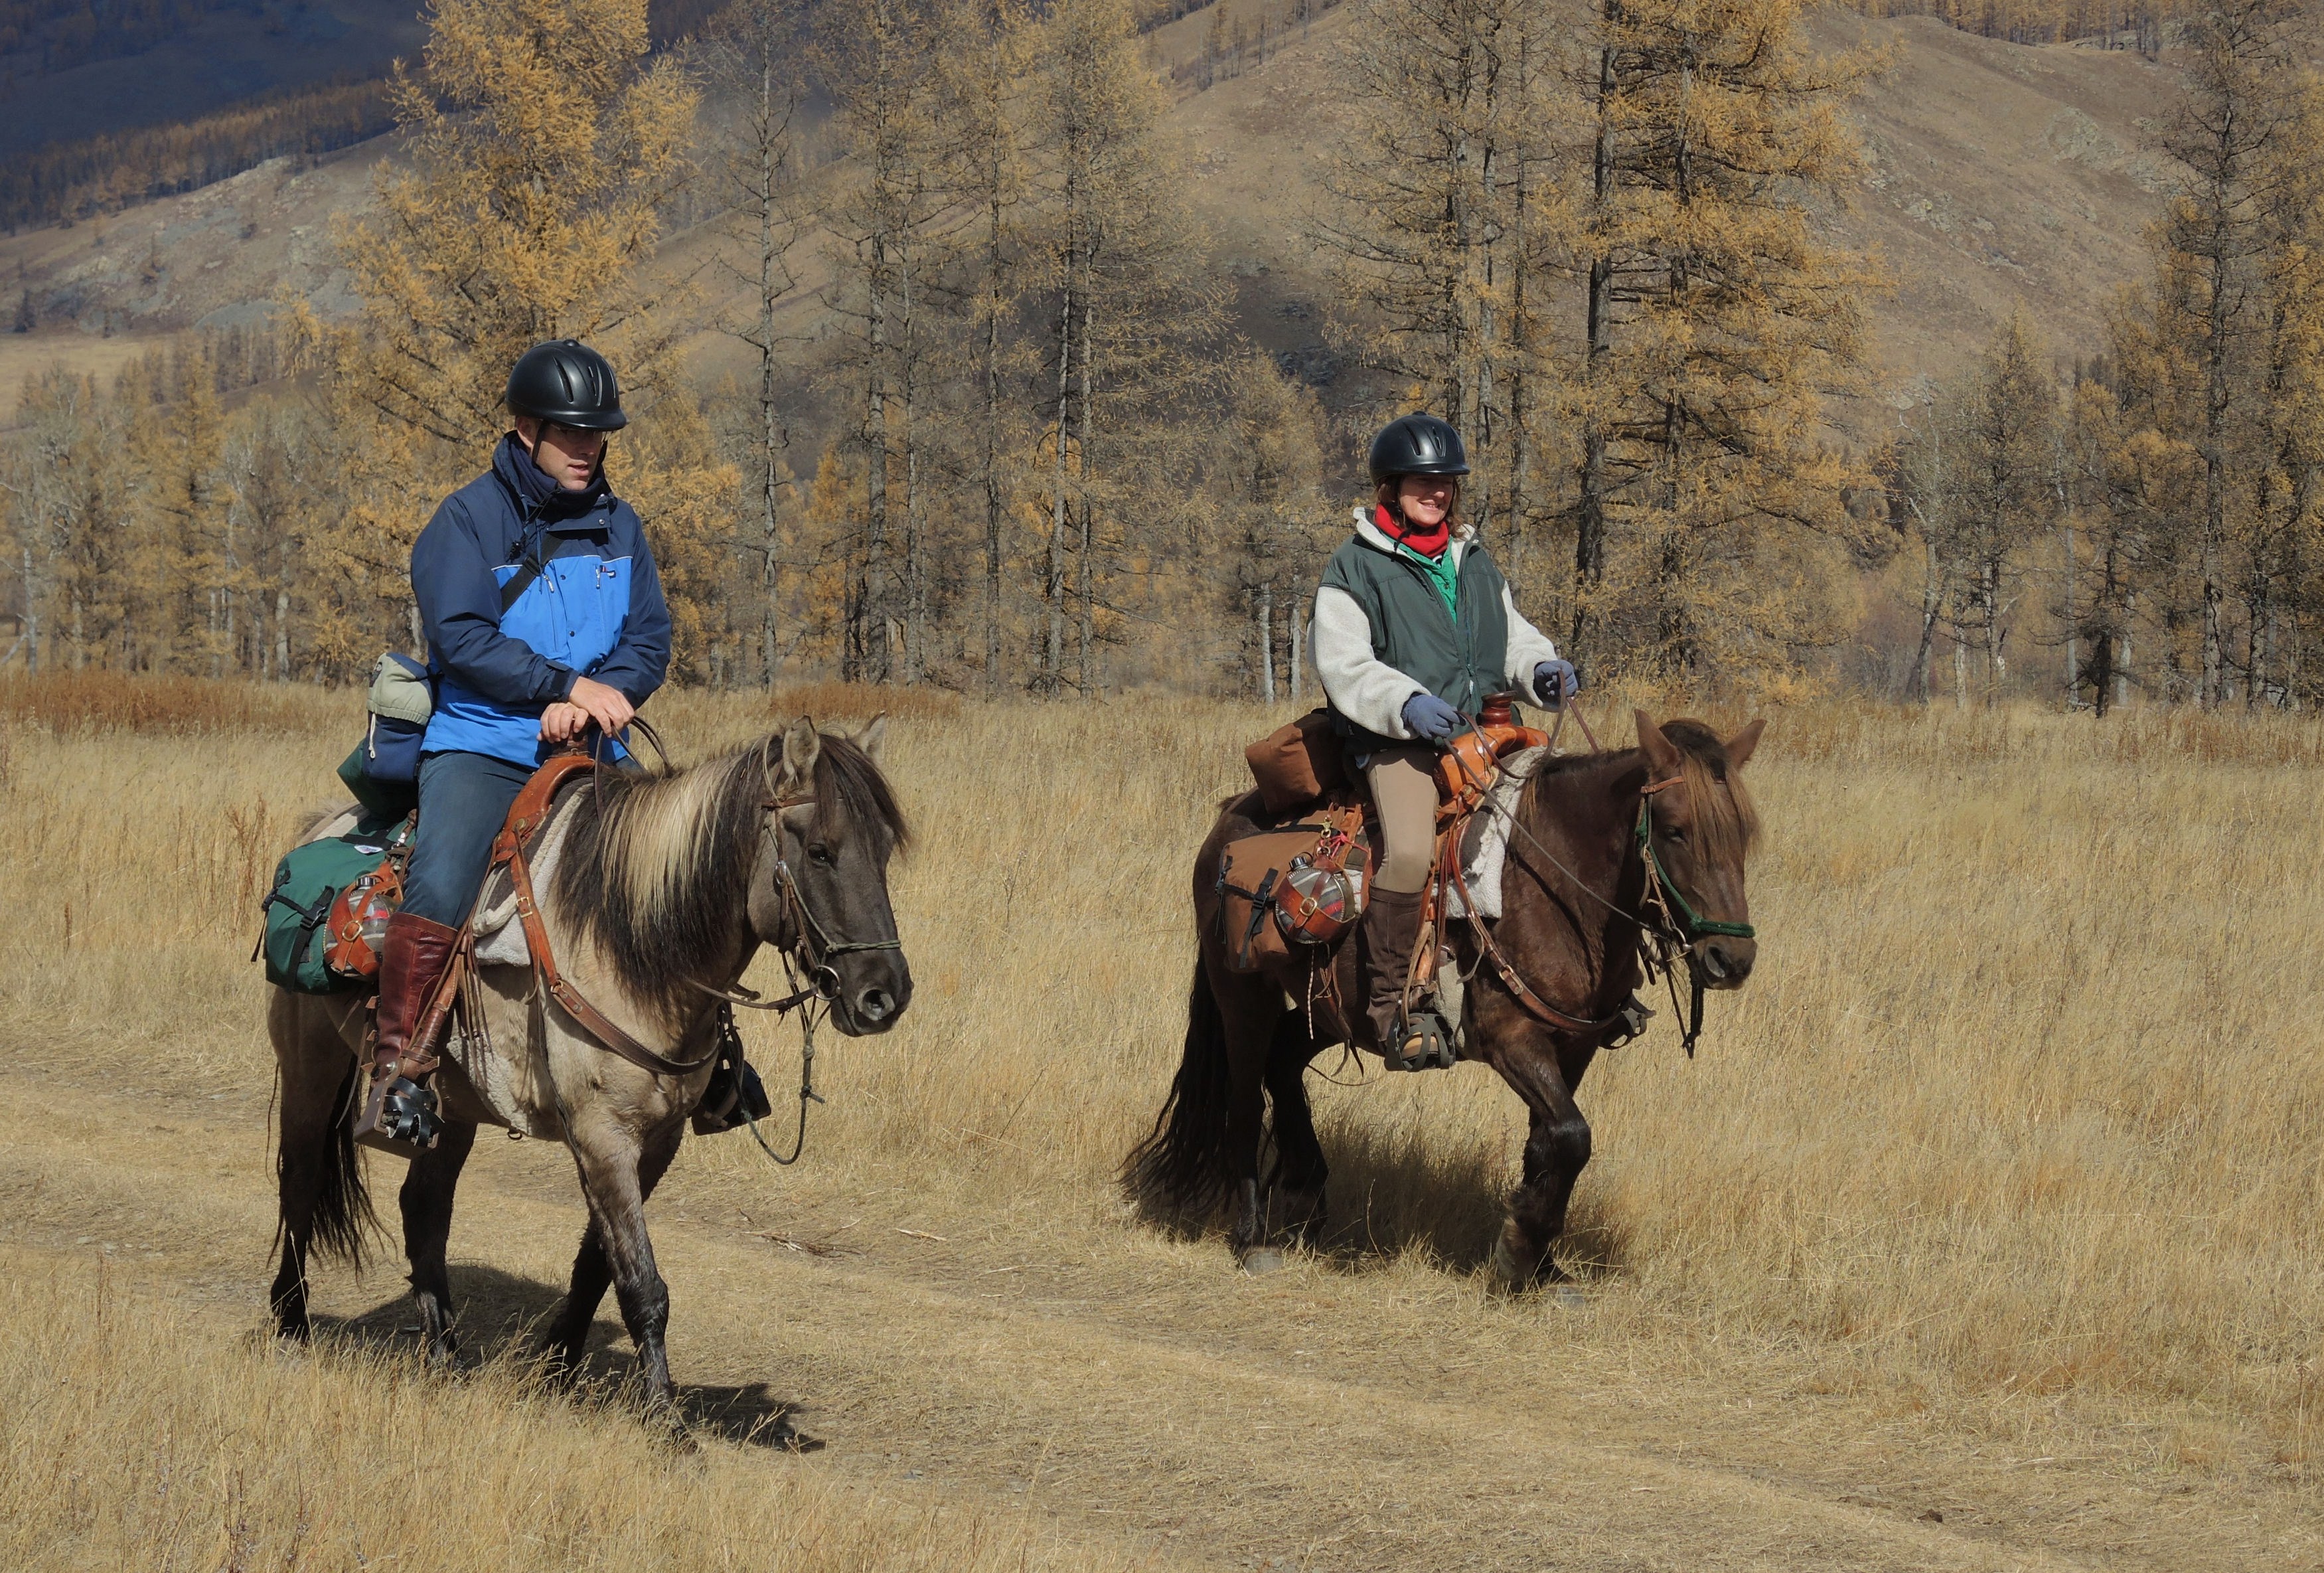 Horseback Riding in Mongolia - Riding Guest speaks